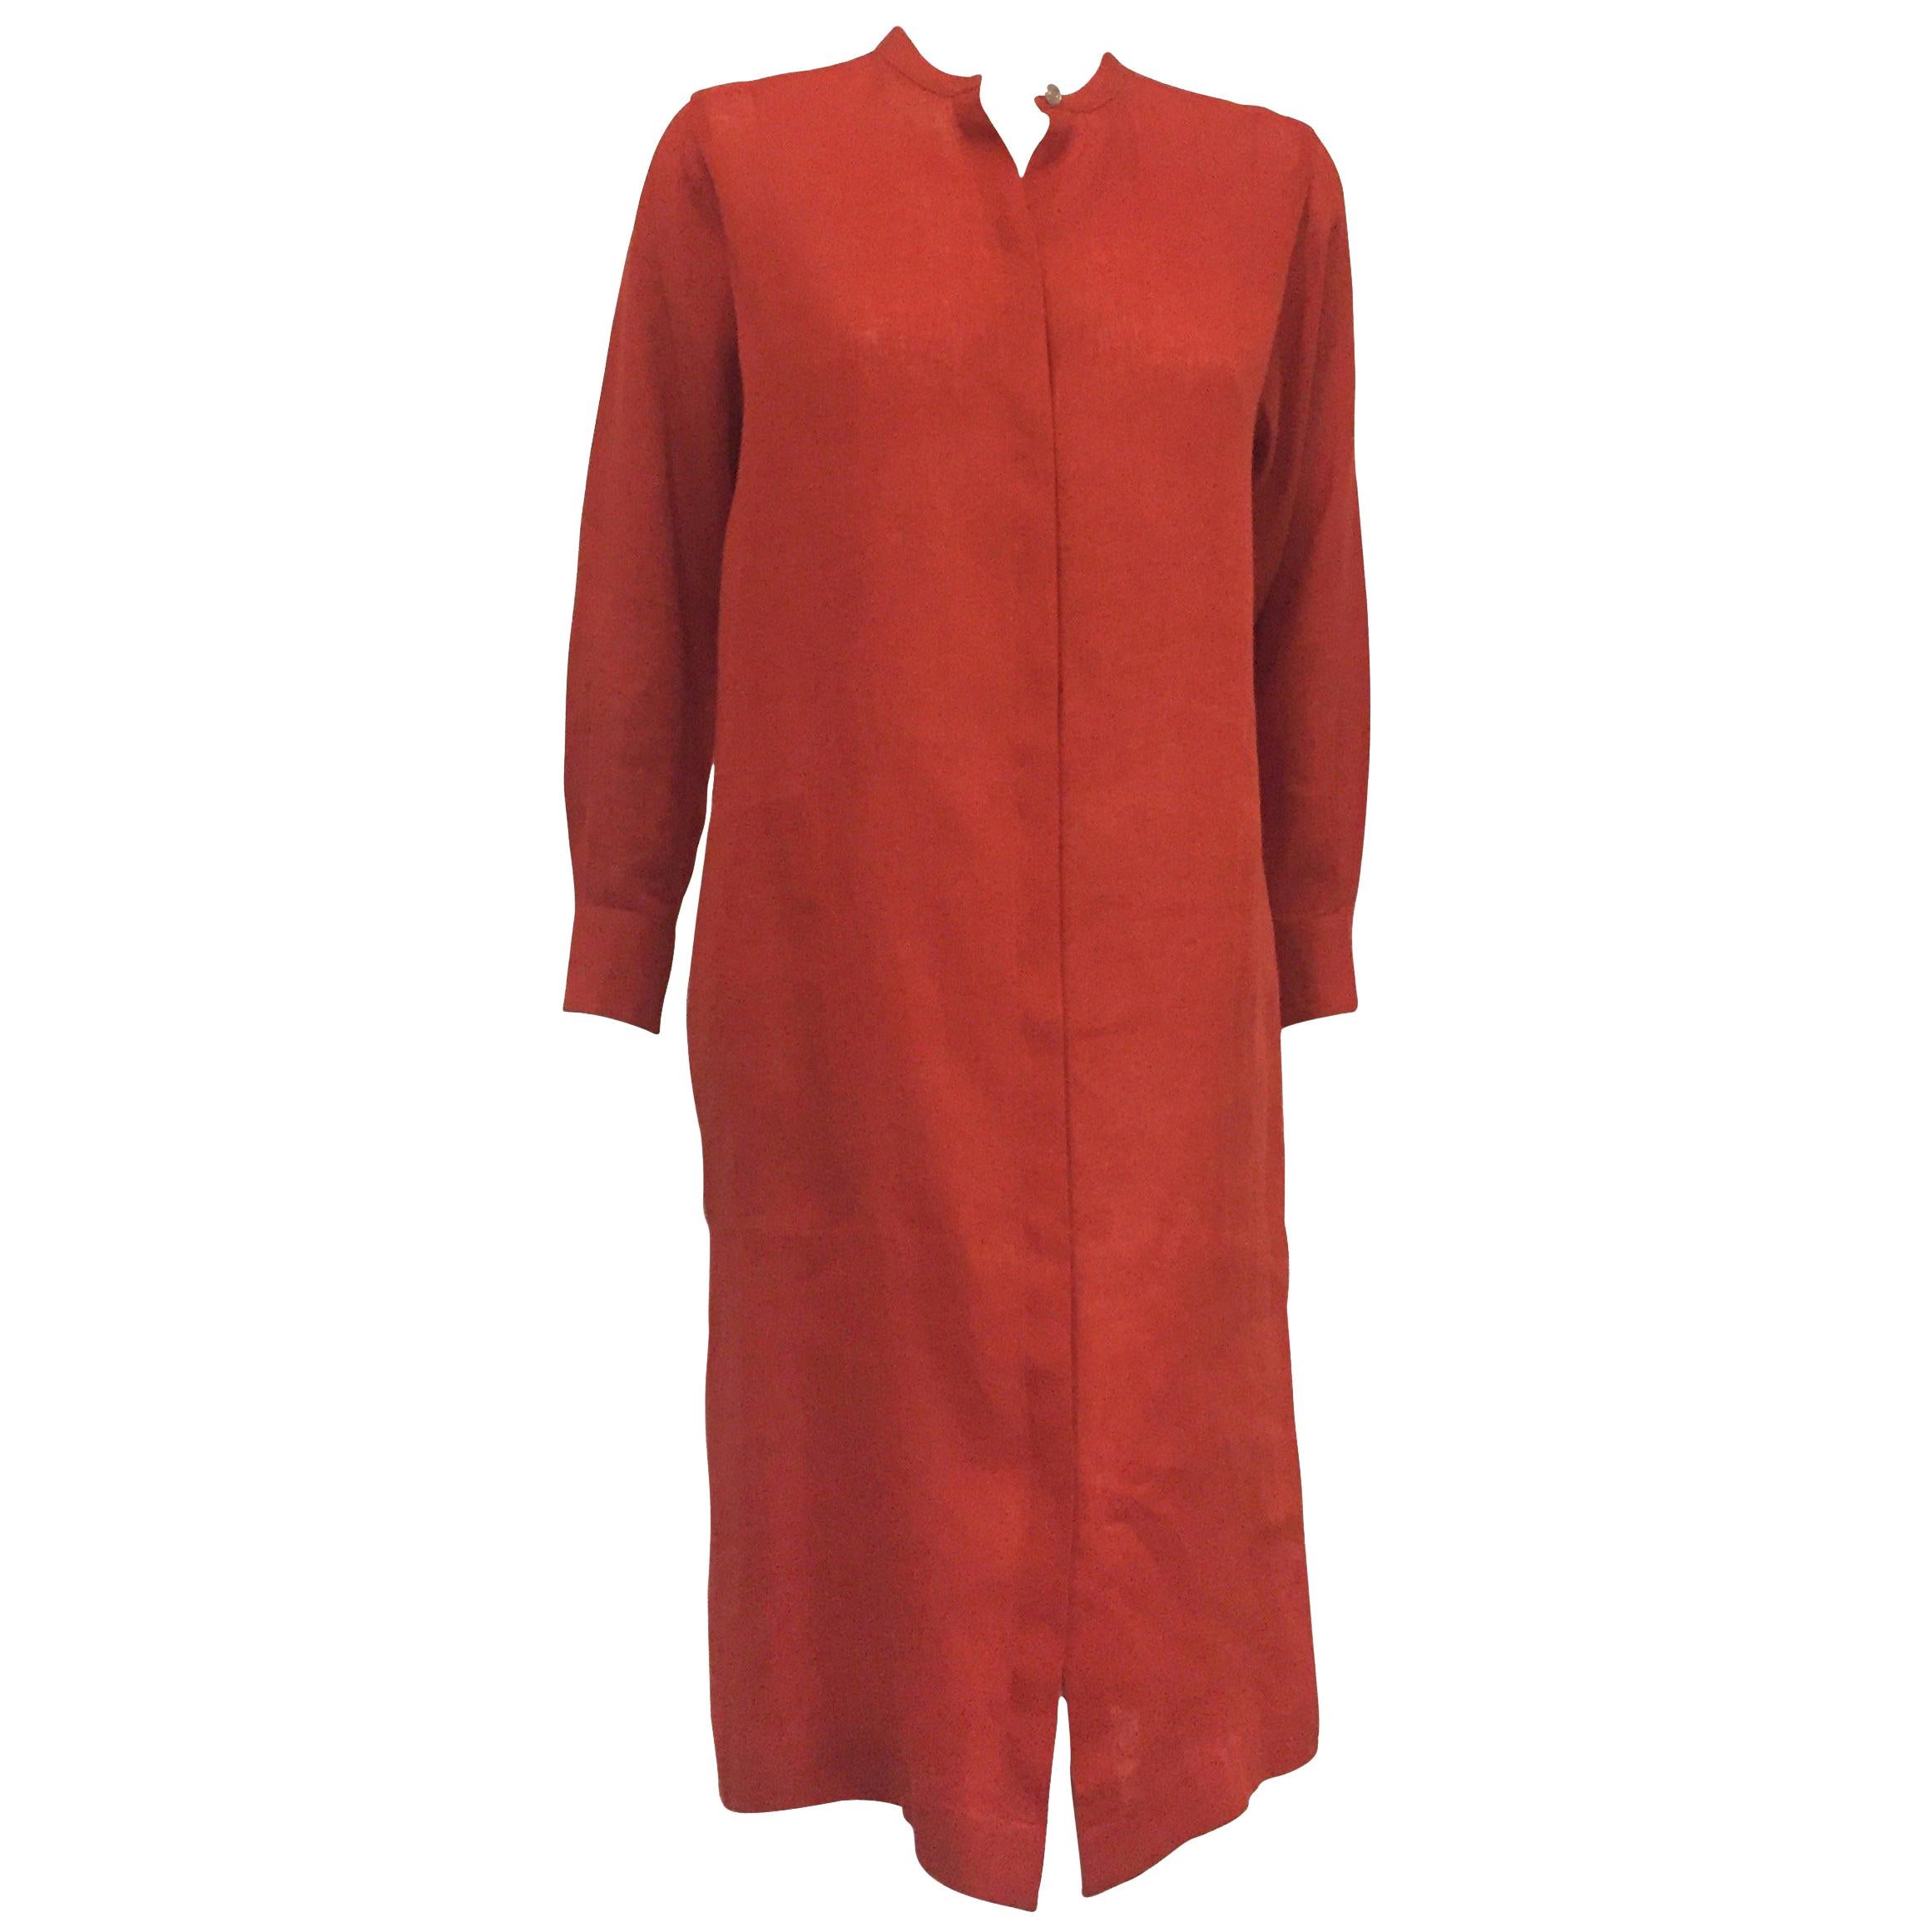 Hermes Summer Outstanding Red/Orange Linen Dress